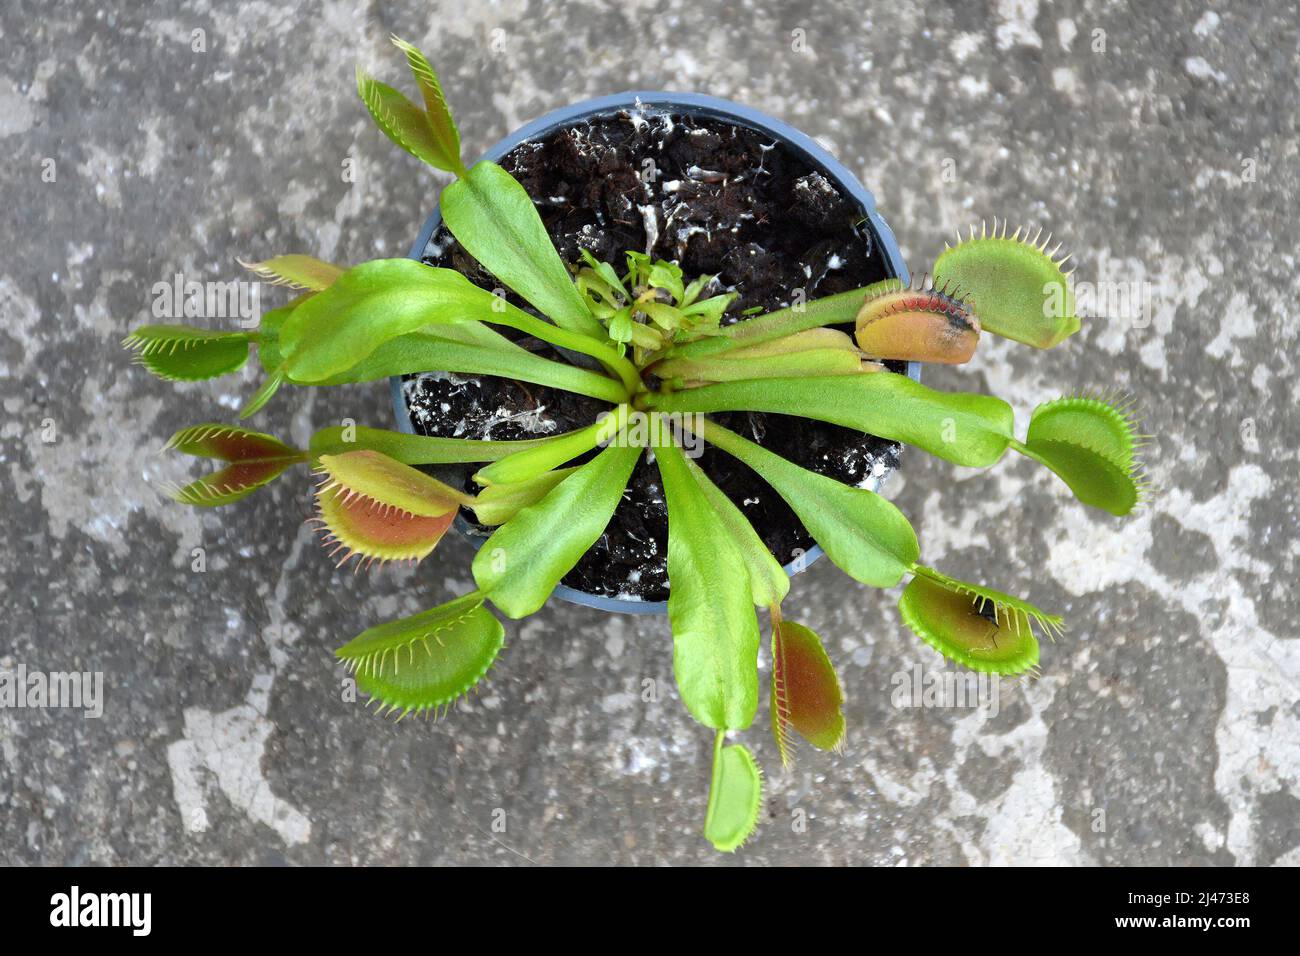 Venus flytrap plant. Top view of Dionaea muscipula in a pot Stock Photo